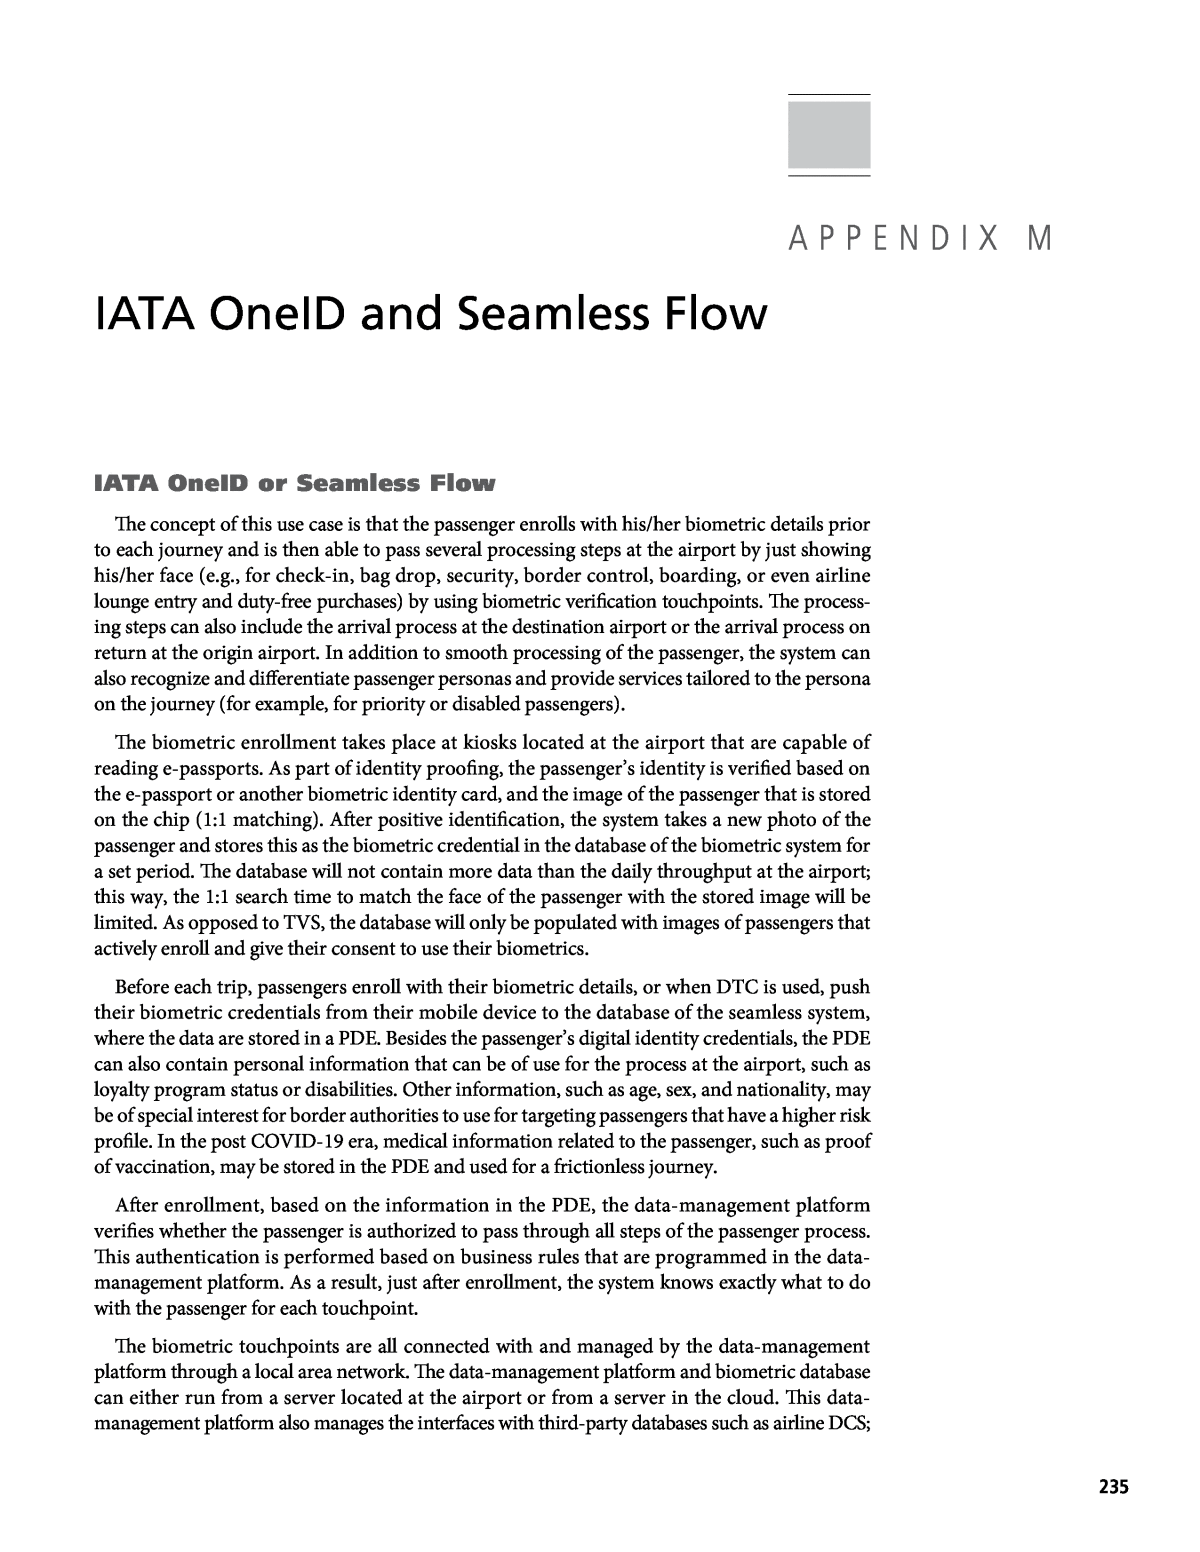 Appendix M - IATA OneID and Seamless Flow, Airport Biometrics: A Primer